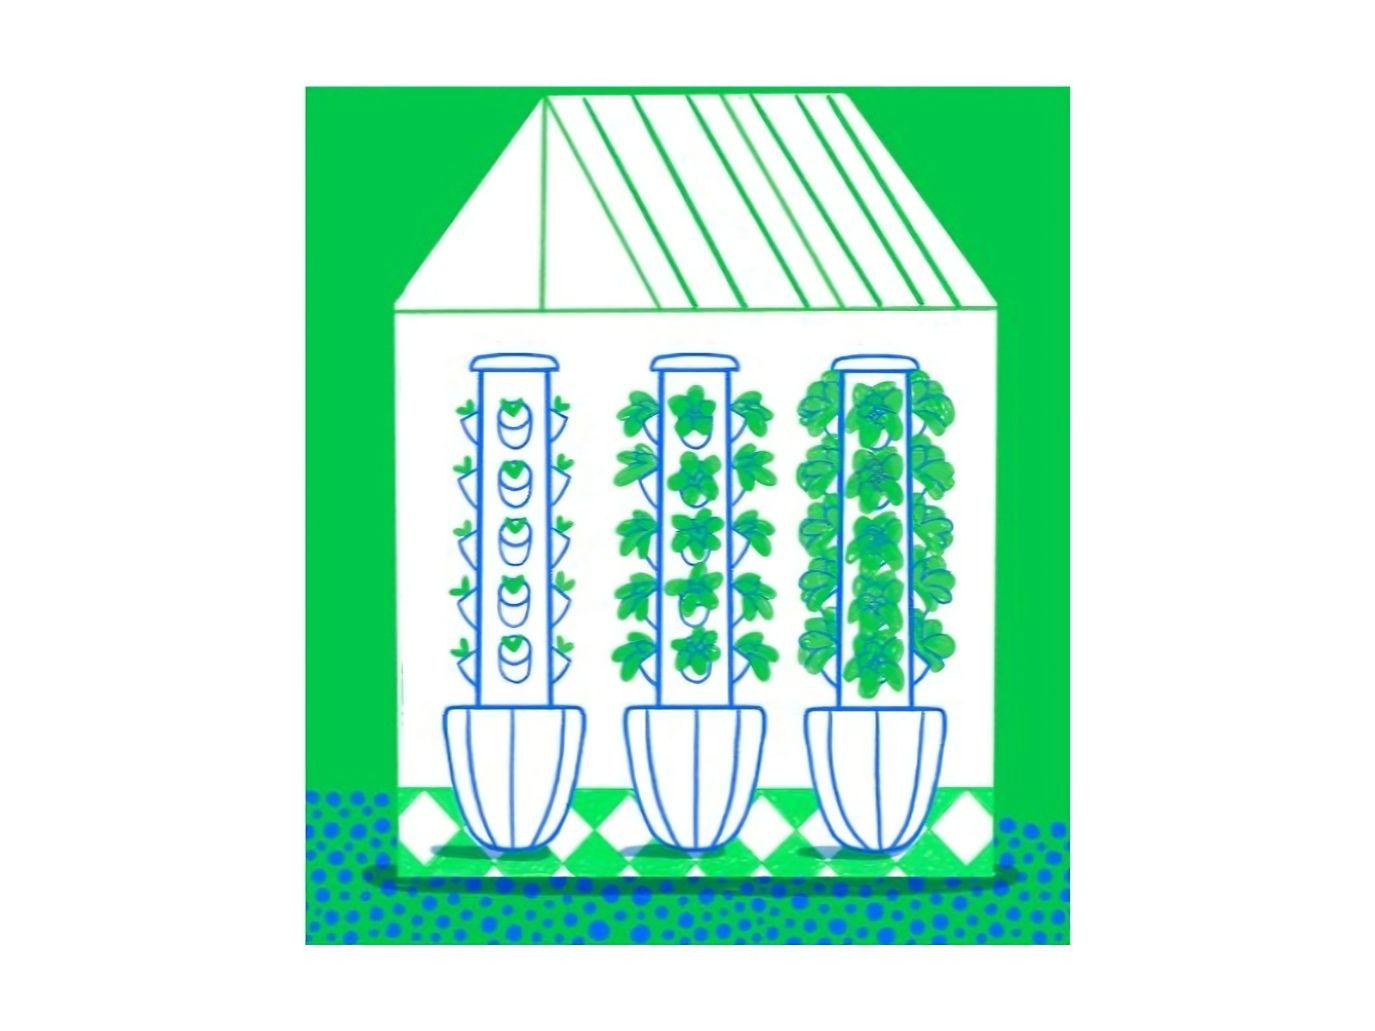 hydroponic tower gardens